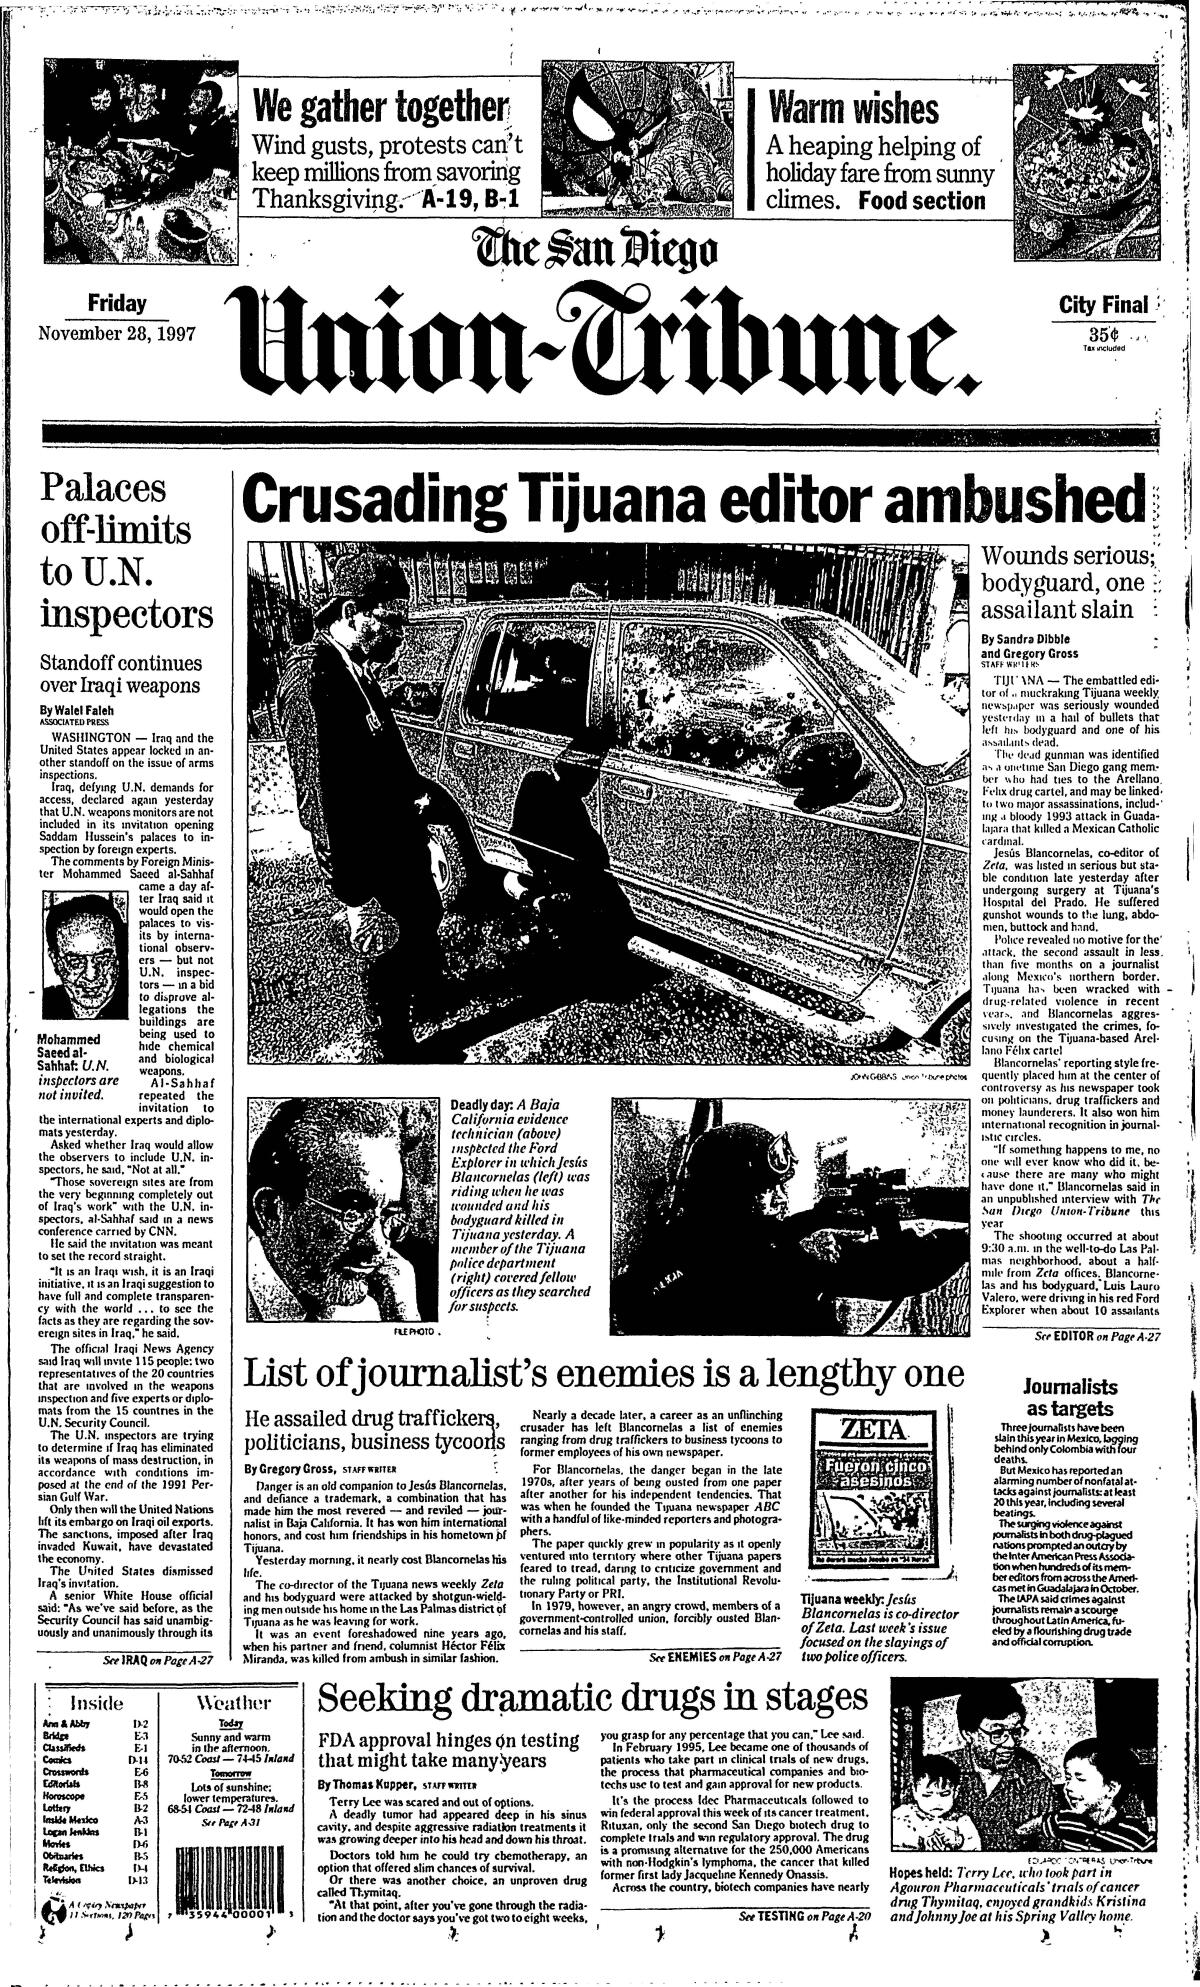 "Crusading Tijuana editor ambushed," on the front page of The San Diego Union-Tribune, Nov. 28, 1997.